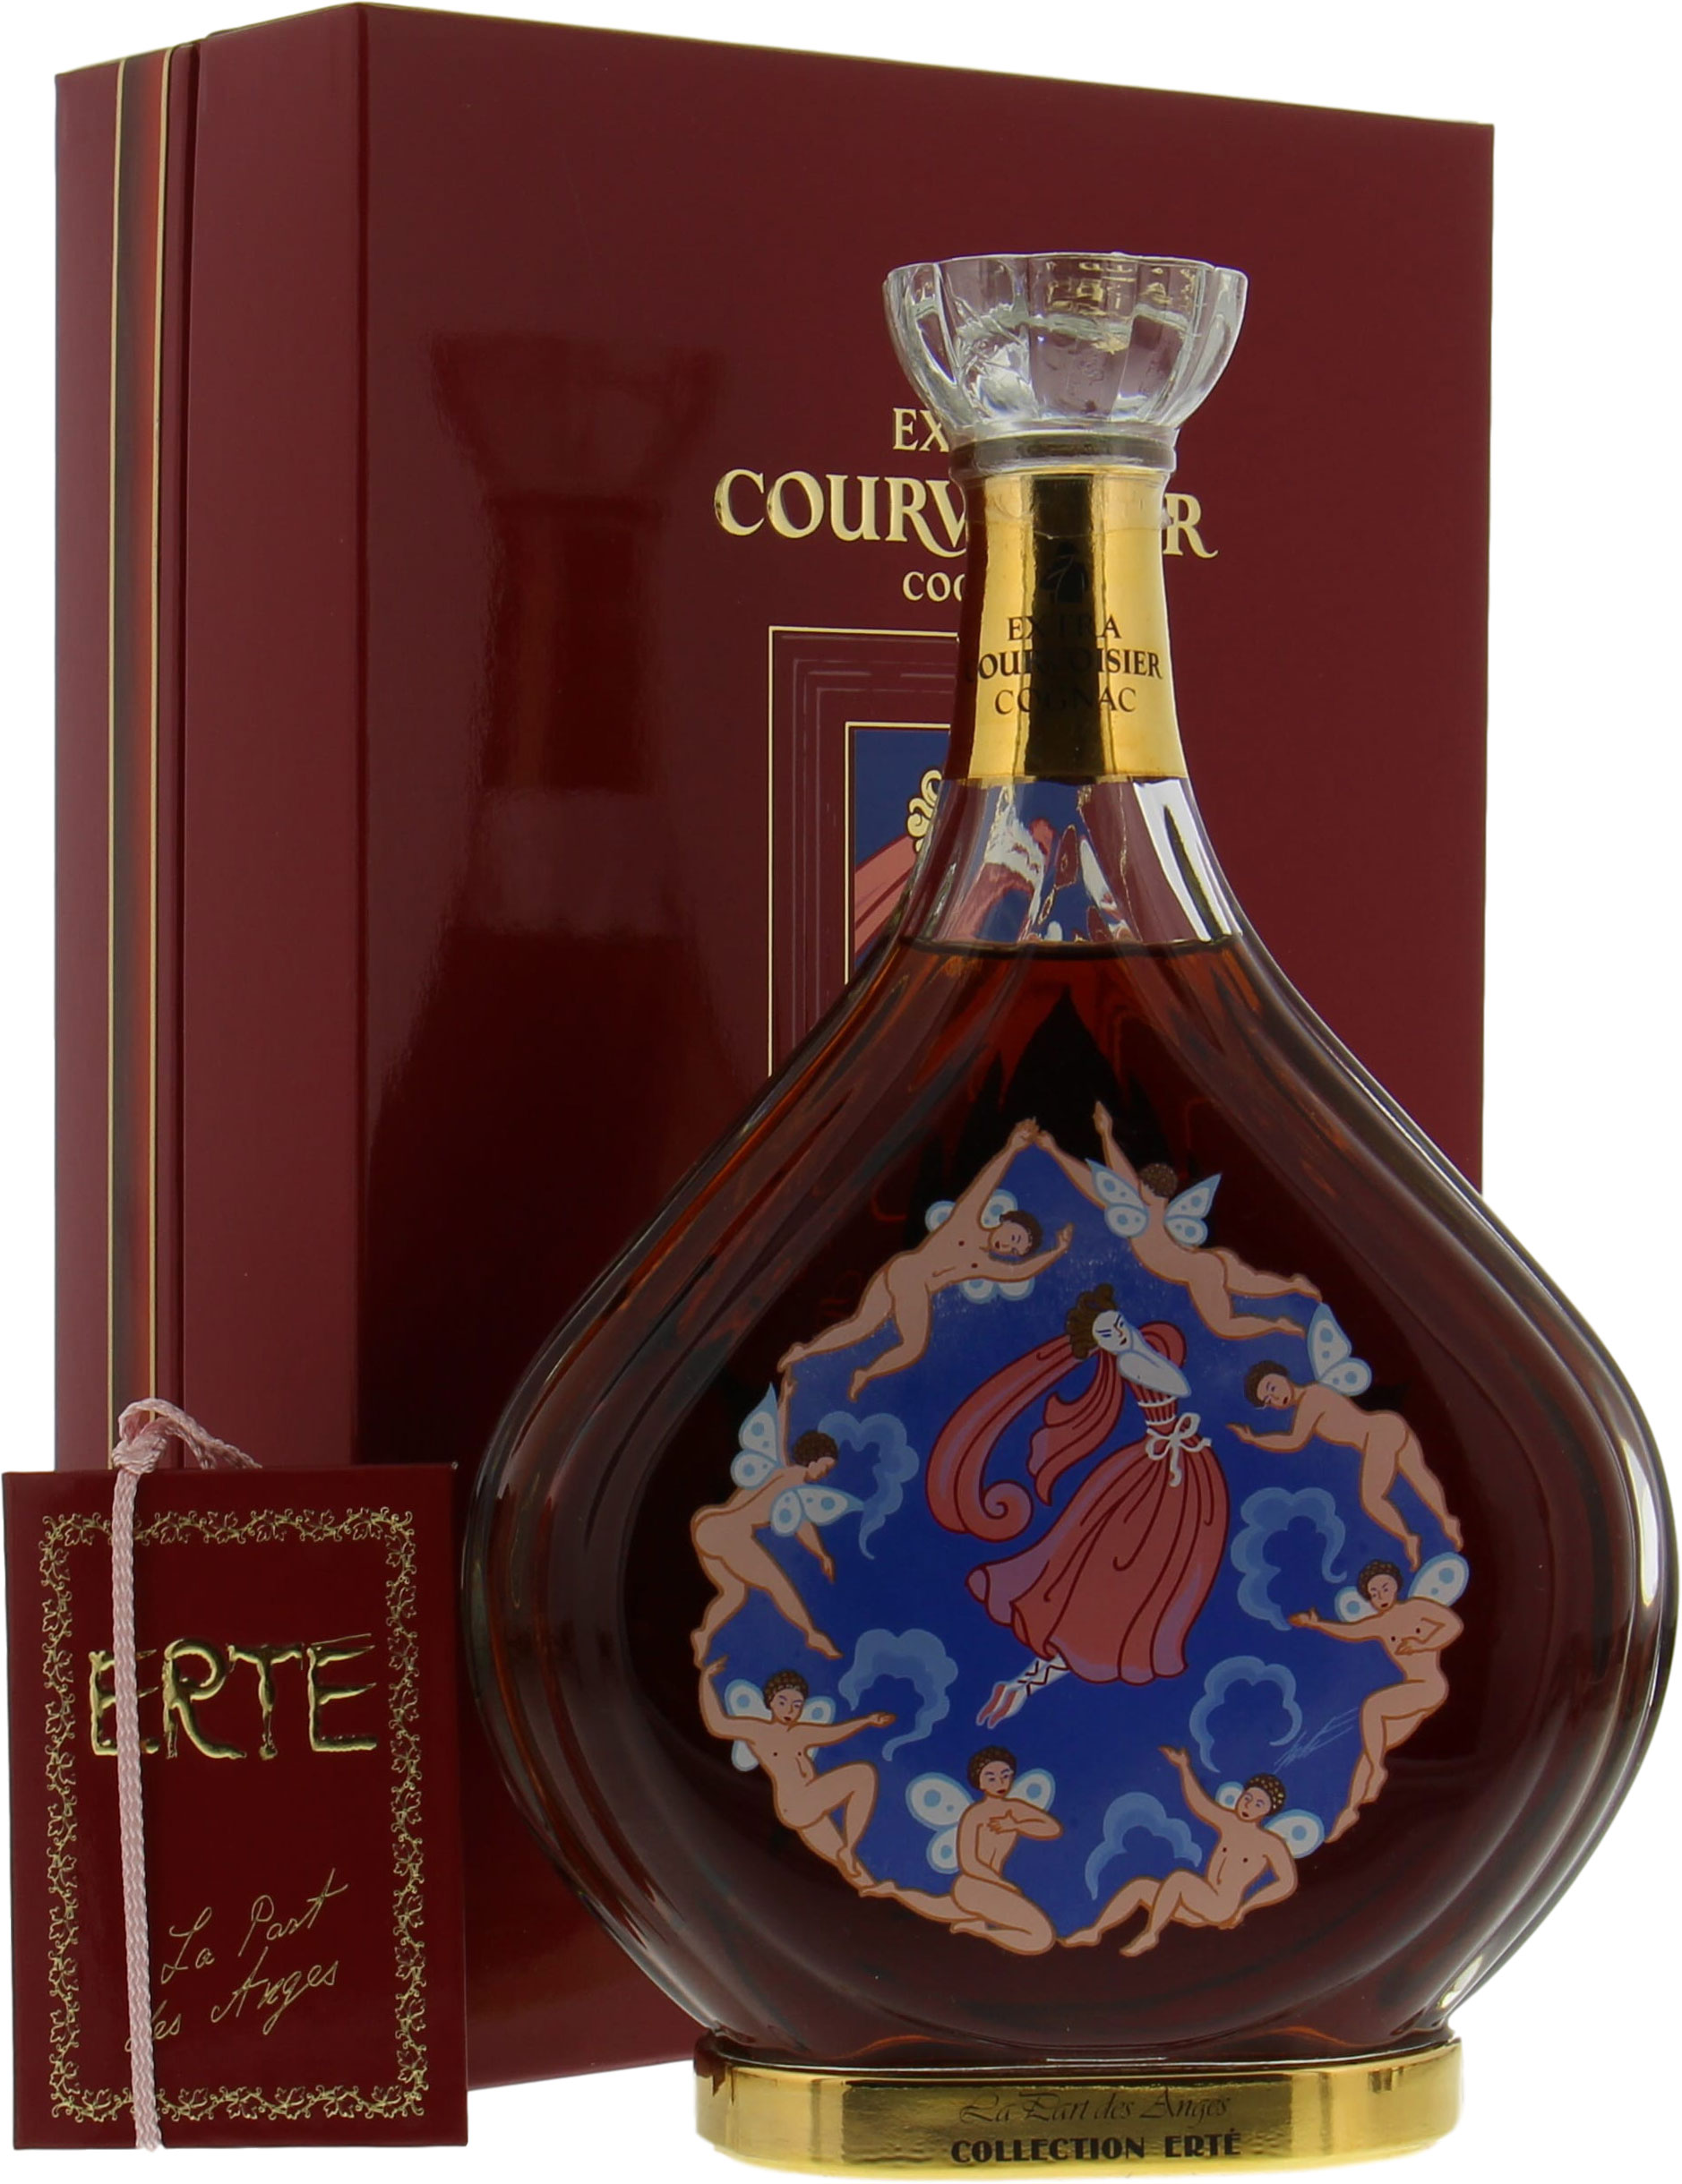 Courvoisier Cognac - Erte no 7 NV From Original Wooden Case